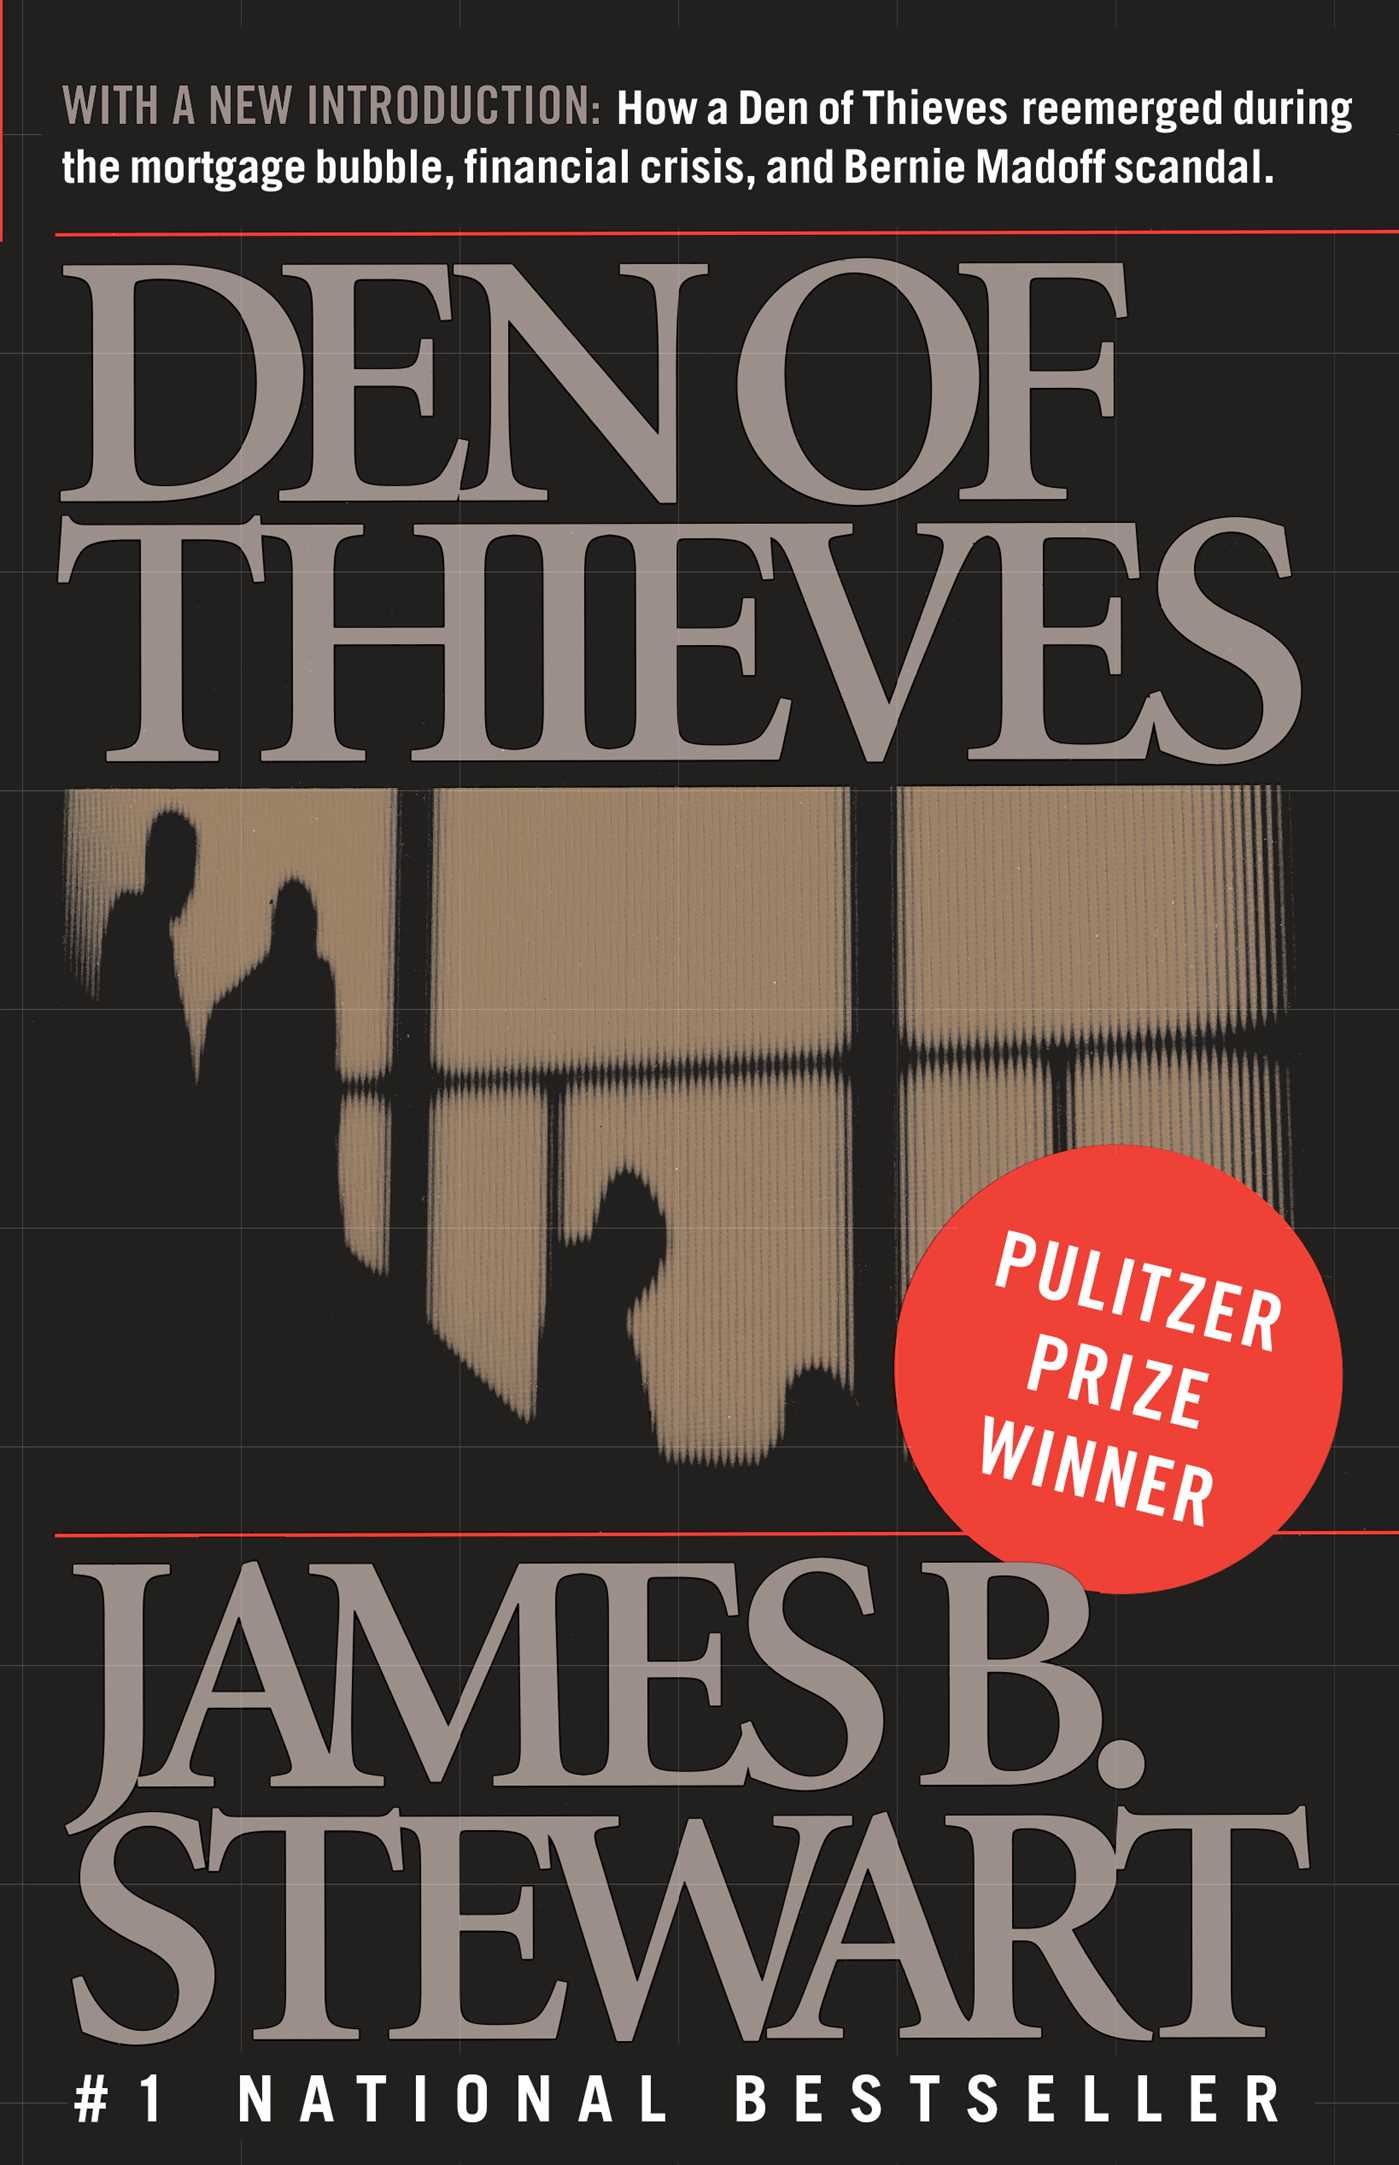 Den of thieves (1992, Simon & Schuster)